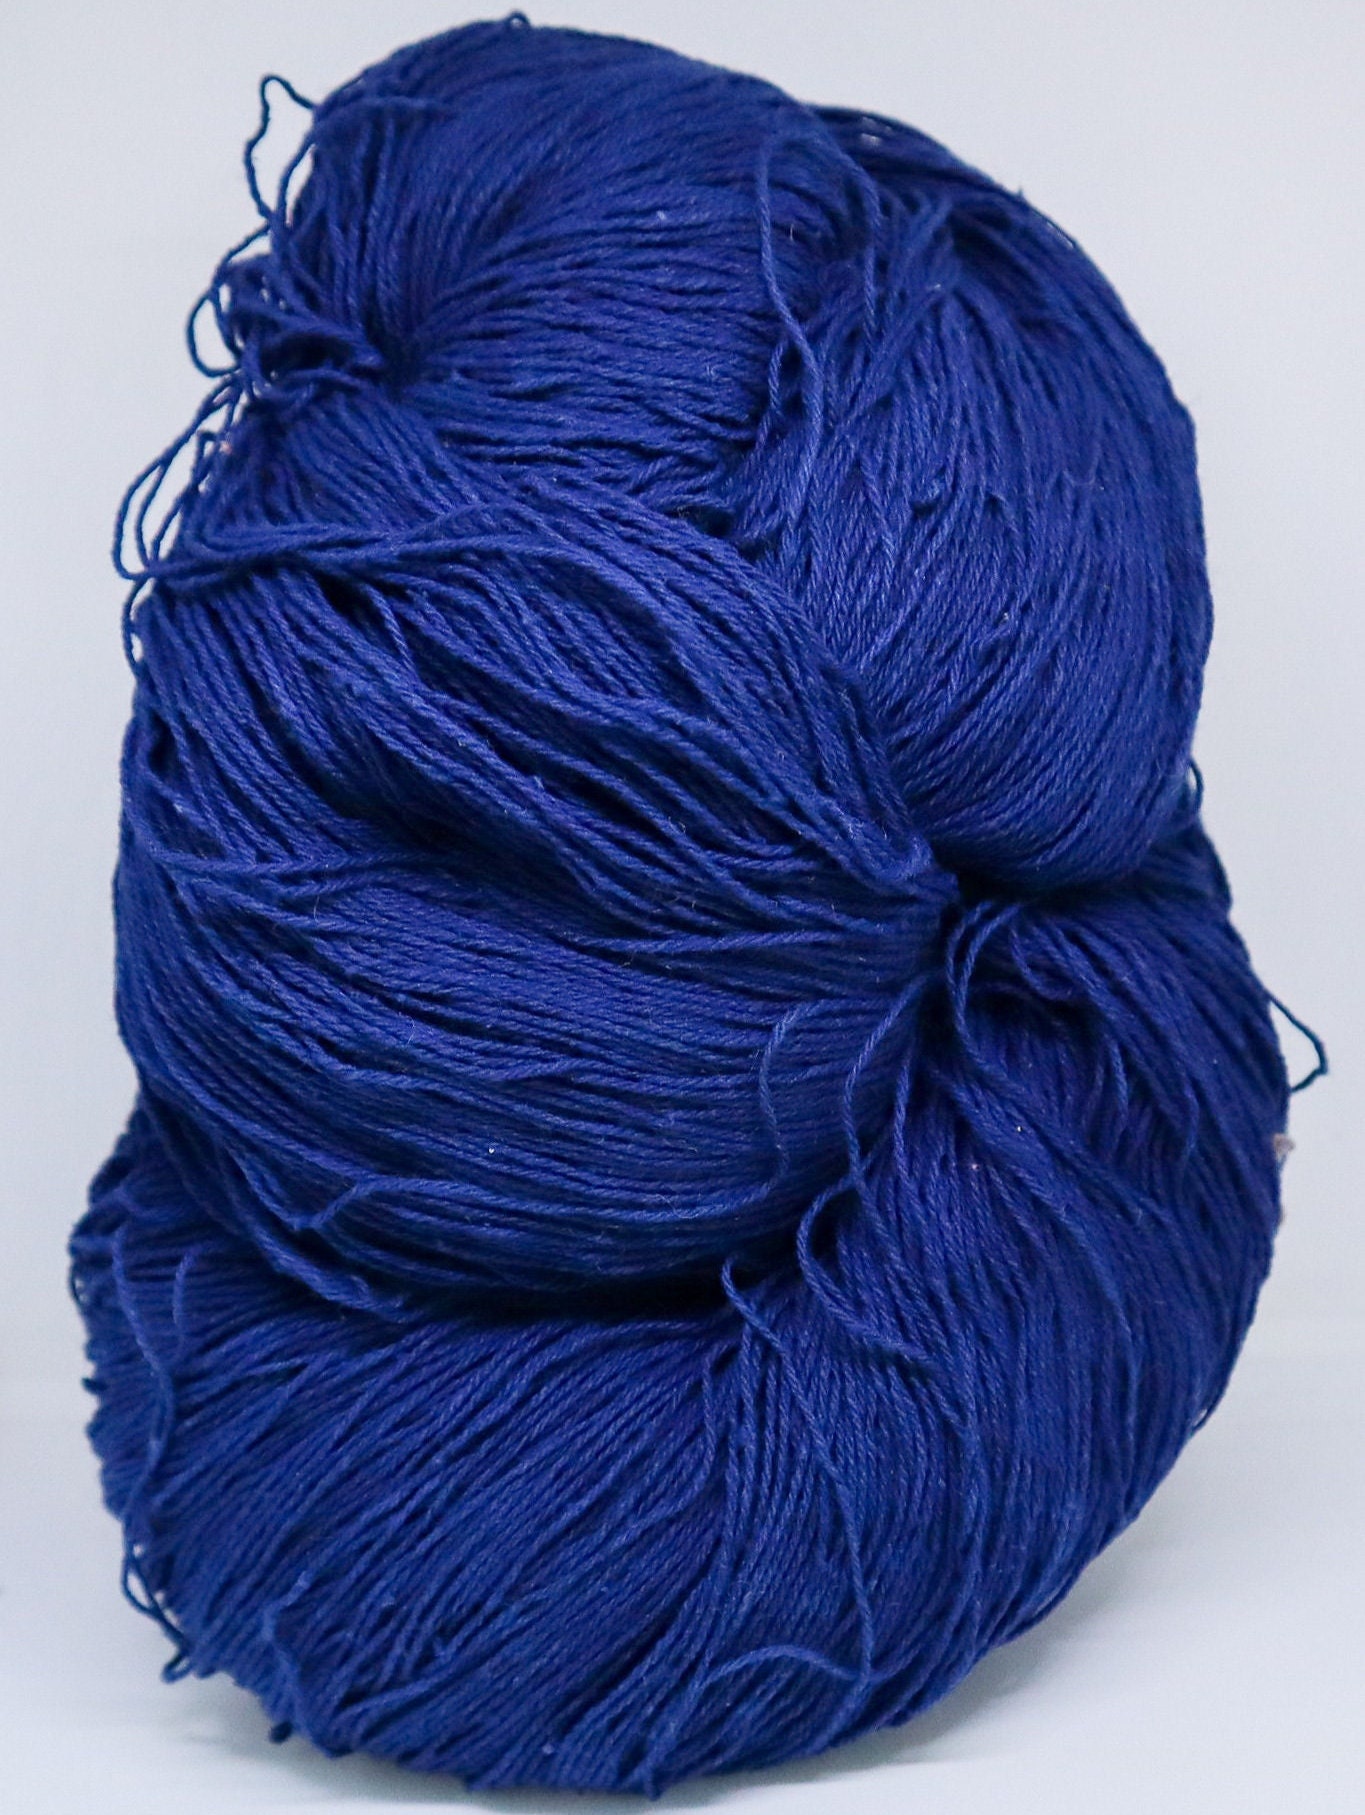 Indigo Bundle of Yarn 220g. Natural Plant Dyed Cotton CHOICE OF